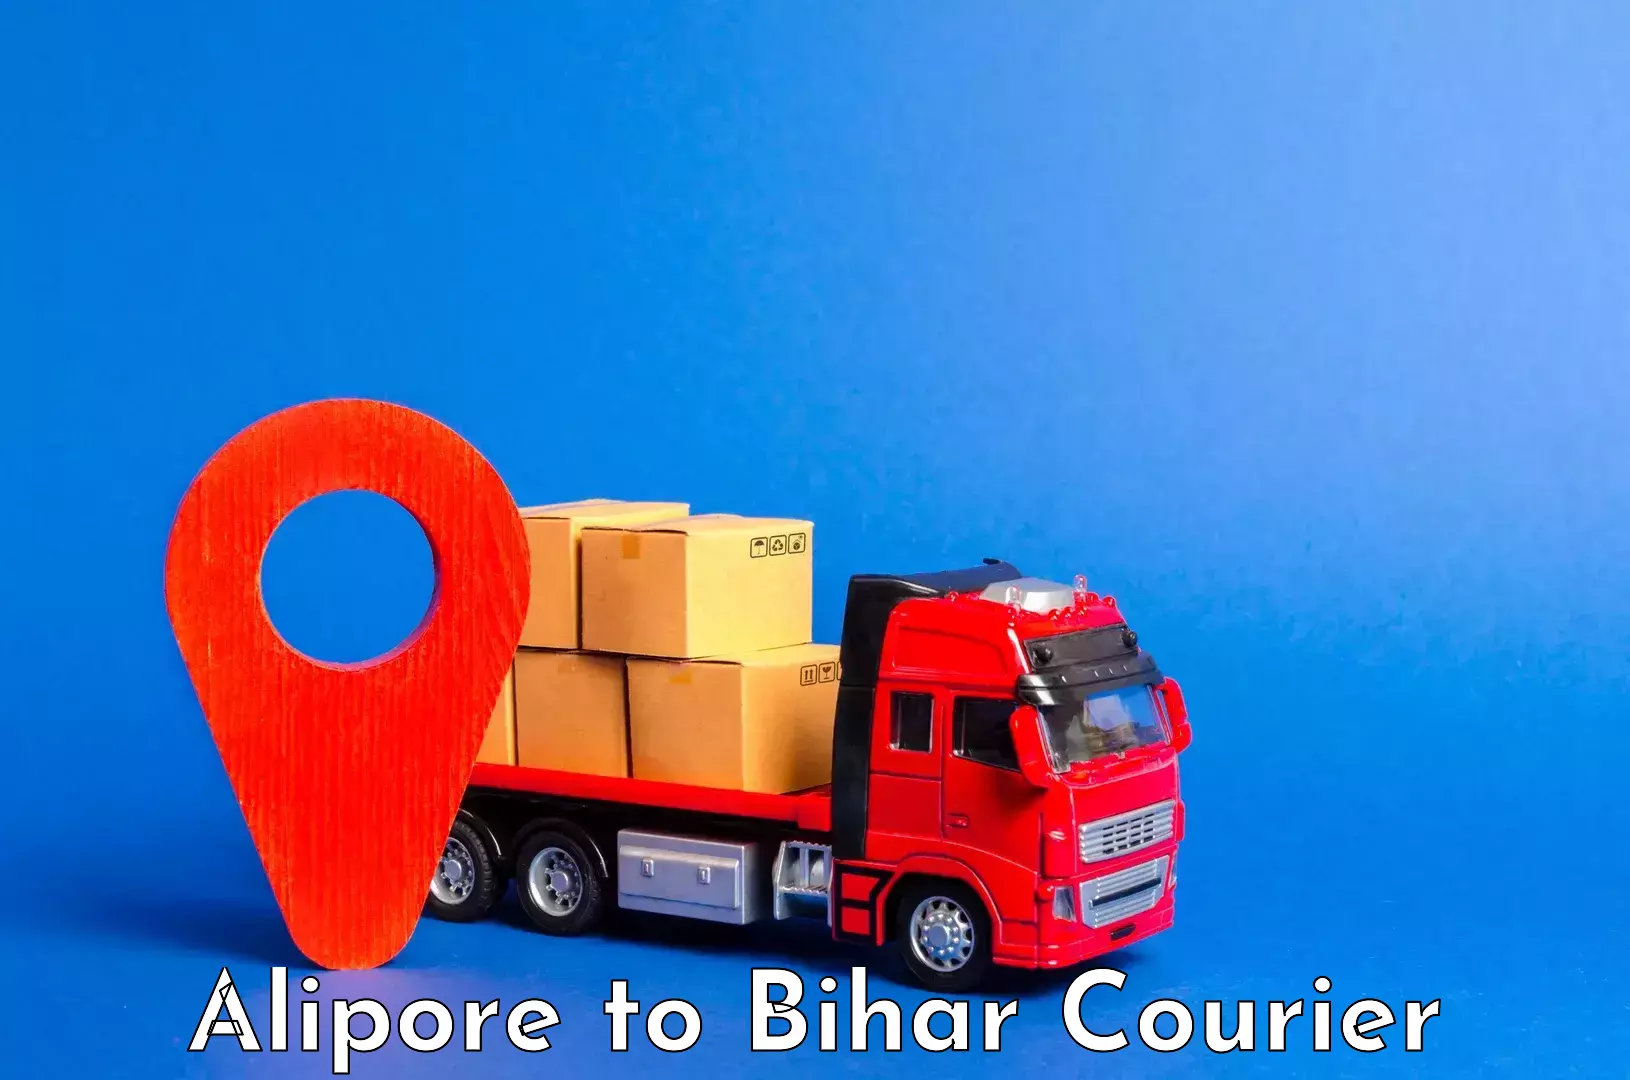 Same day luggage service Alipore to Bihar